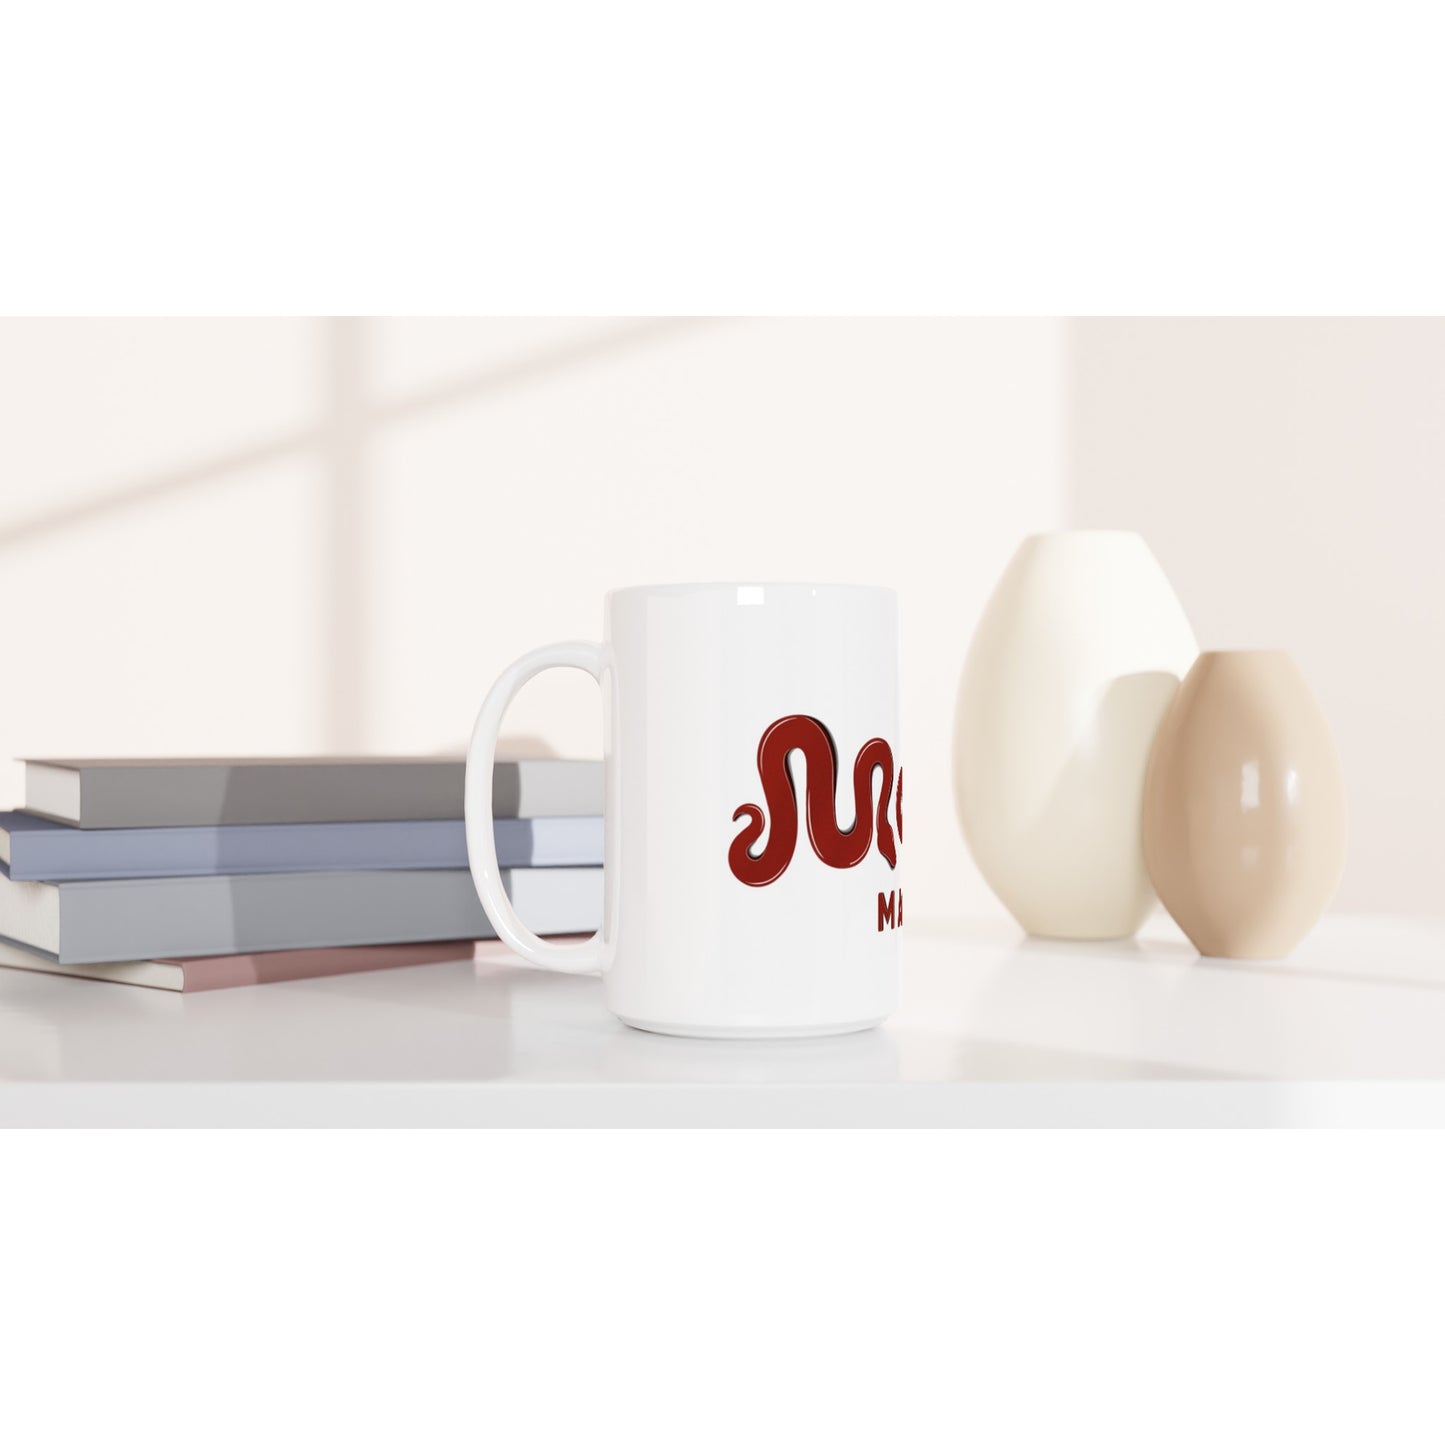 Morph Market (Red) - White 15oz Ceramic Mug